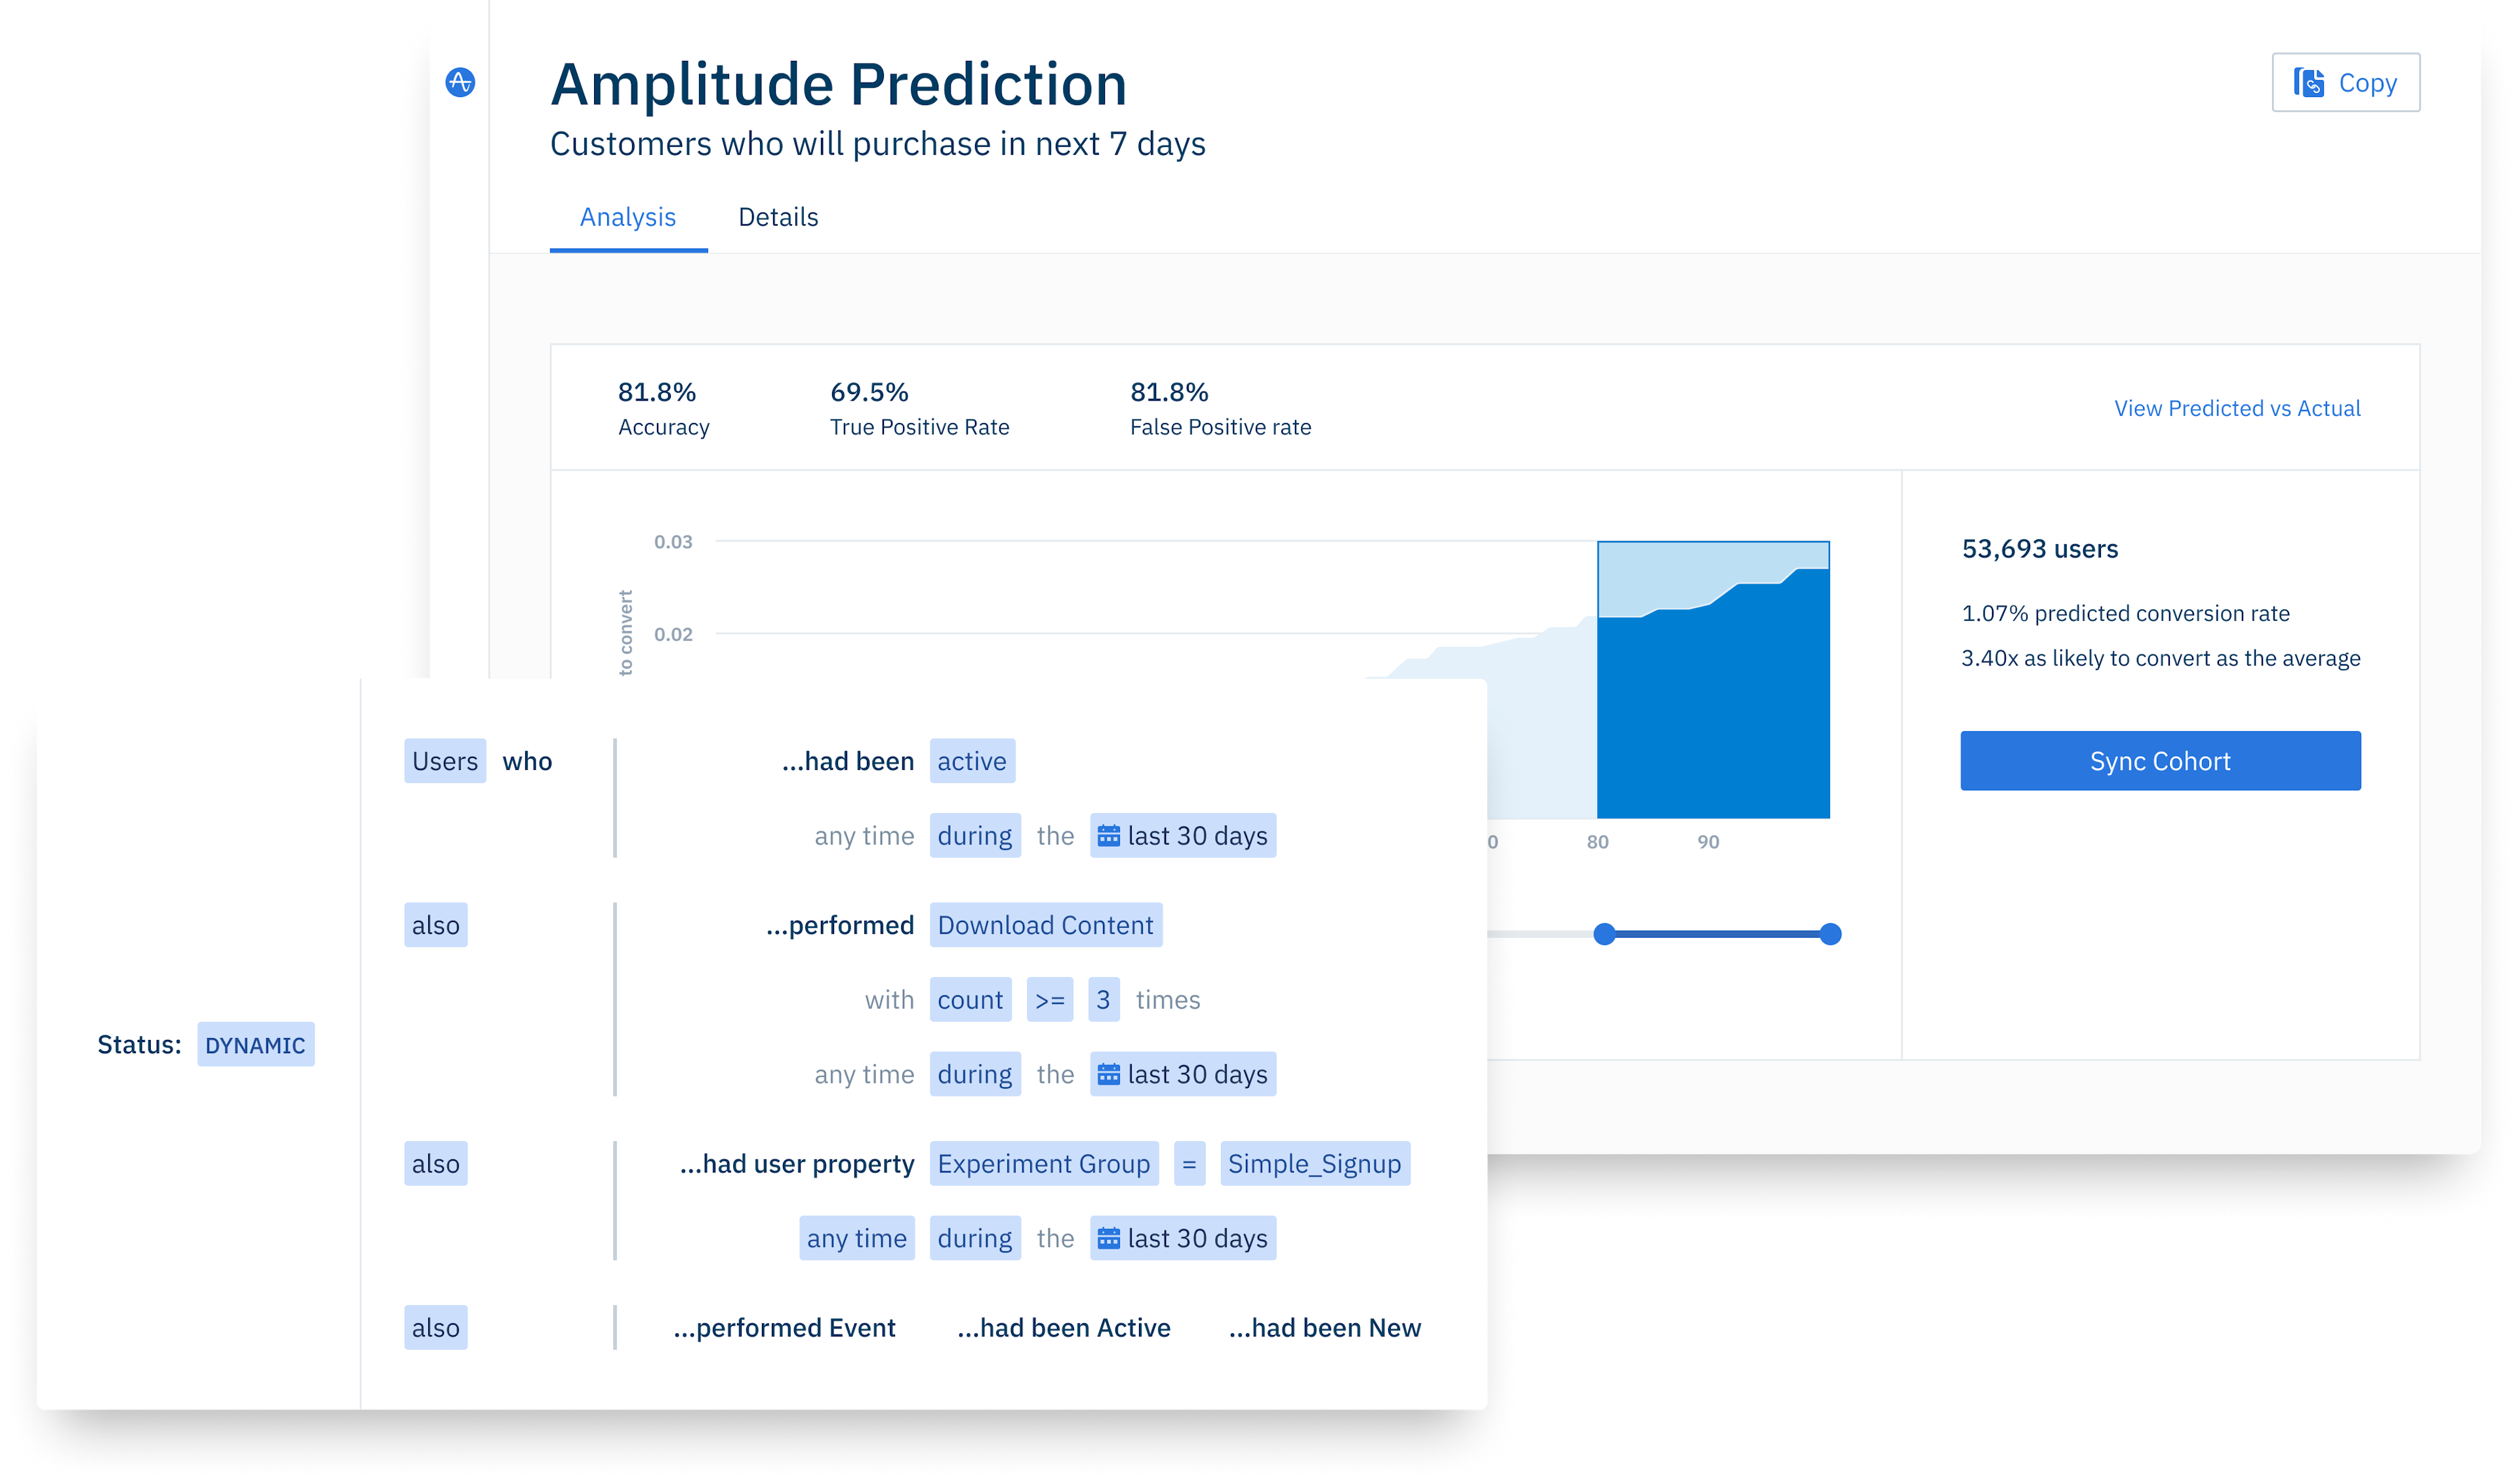 Amplitude prediction analysis